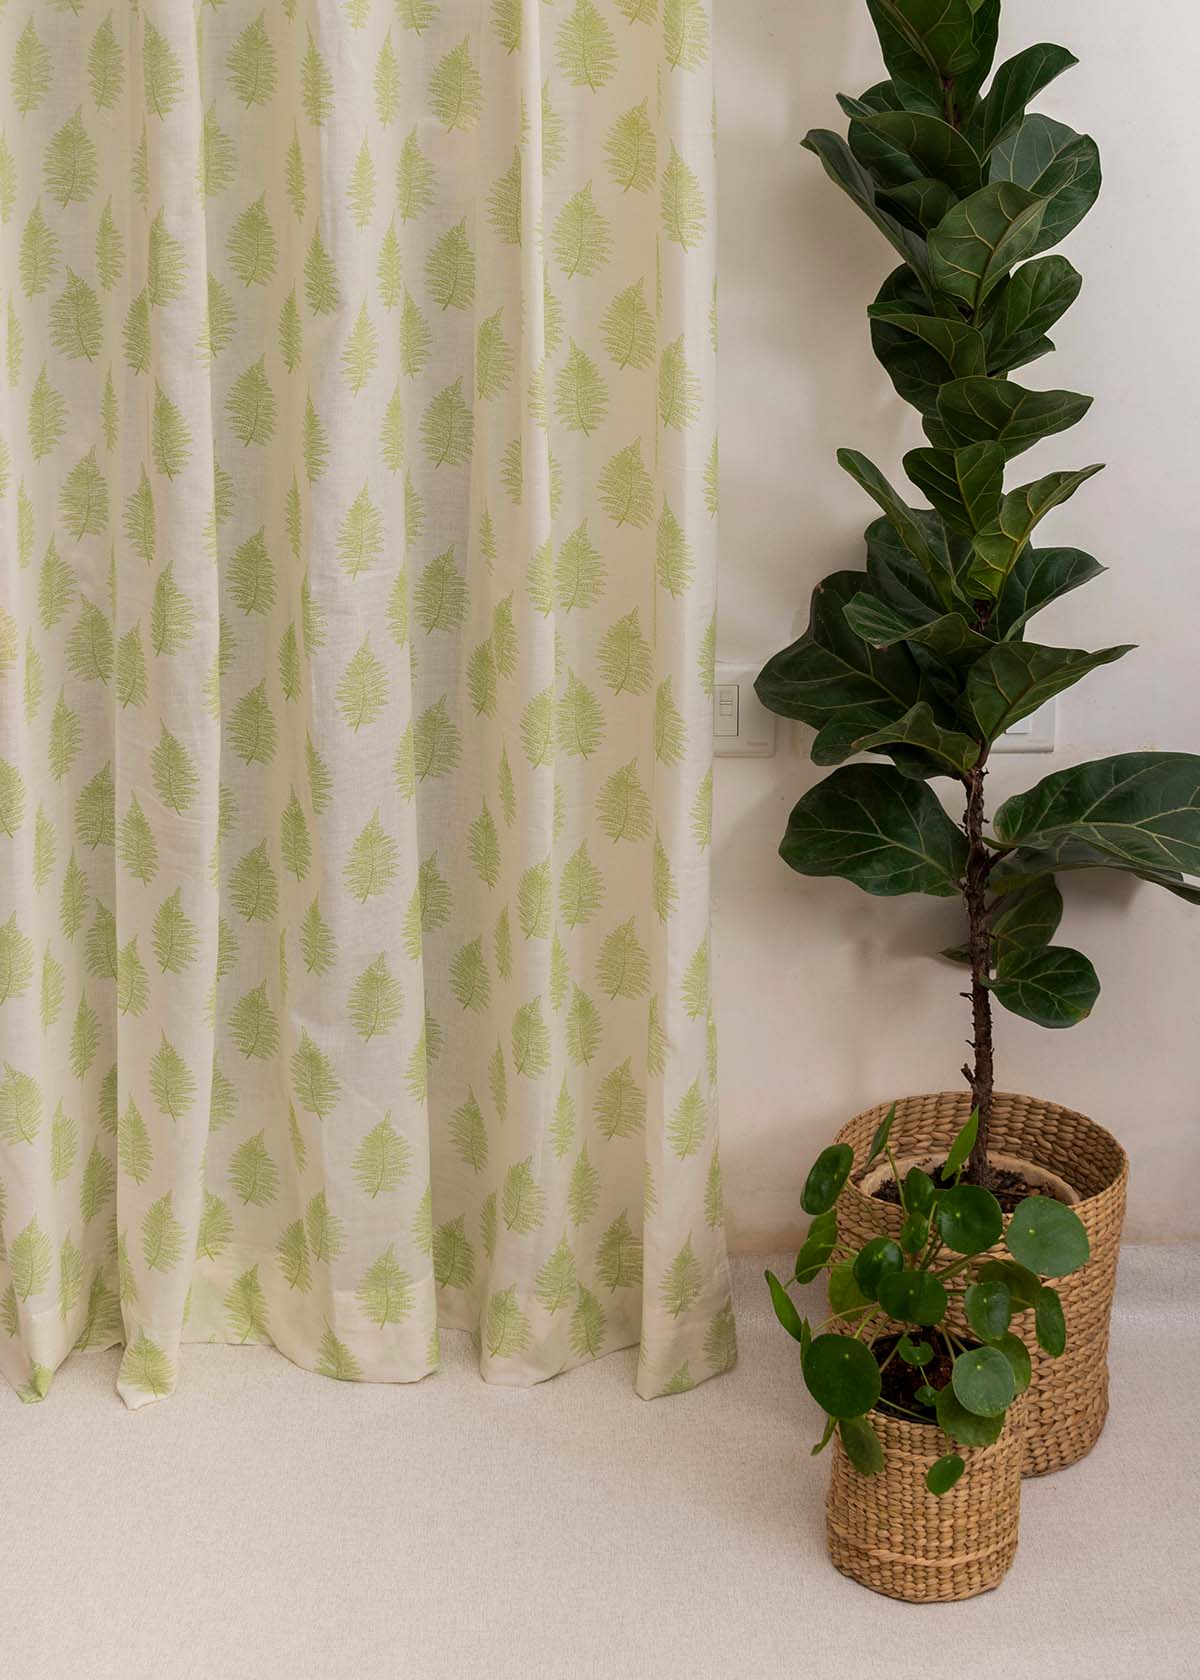 Floating Ferns 100% Sheer floral curtain for Living room & bedroom - Light filtering - Green